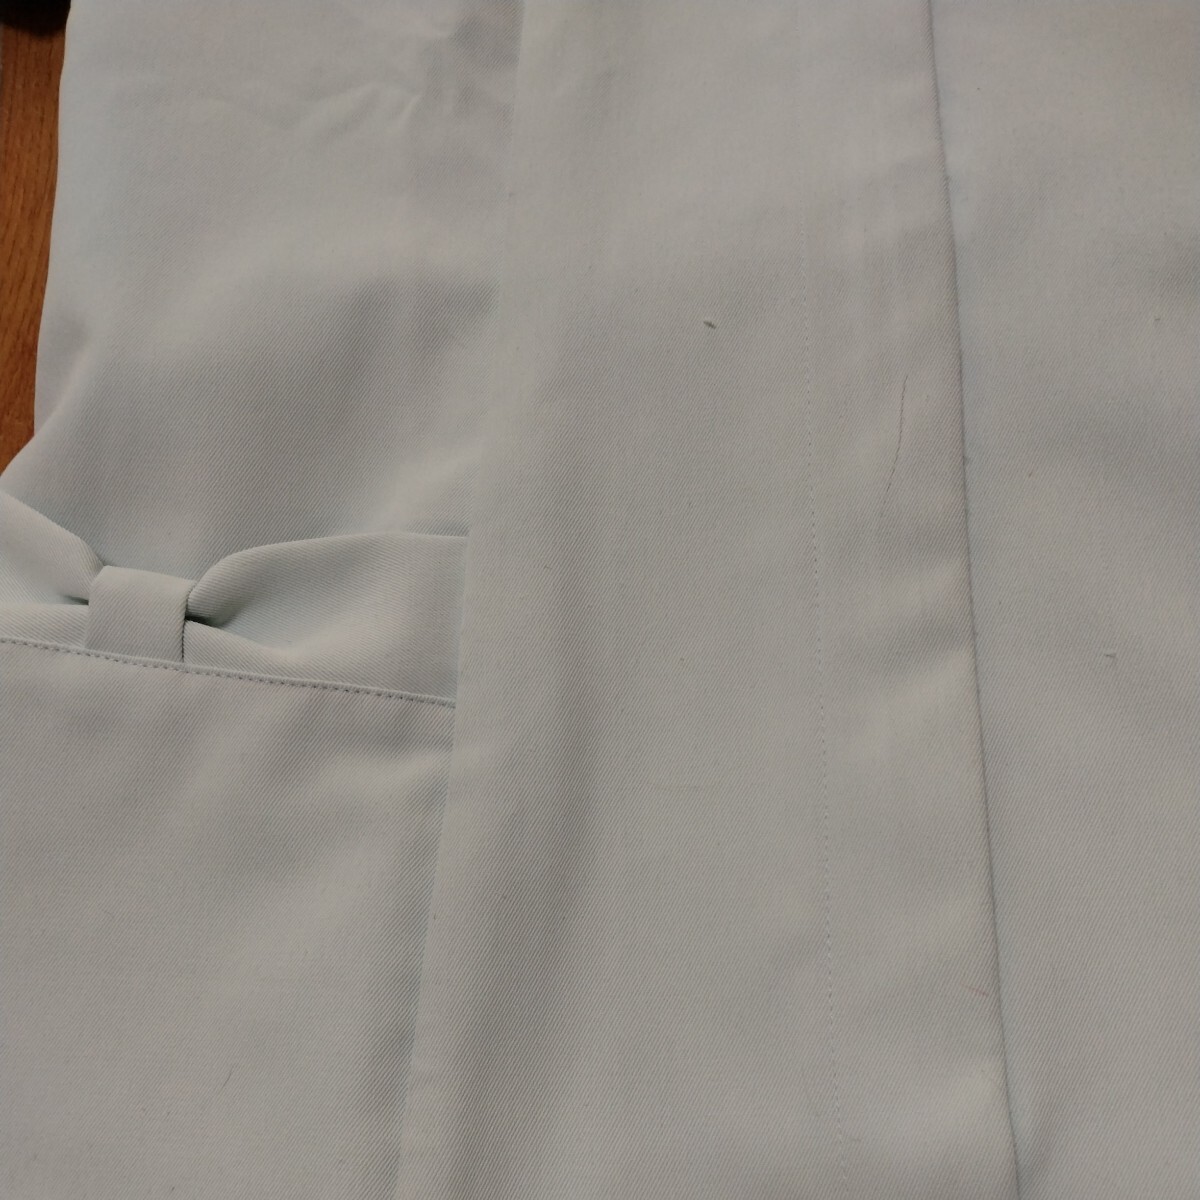  nurse clothes short sleeves One-piece HANAE MORI light mint green size L nursing .